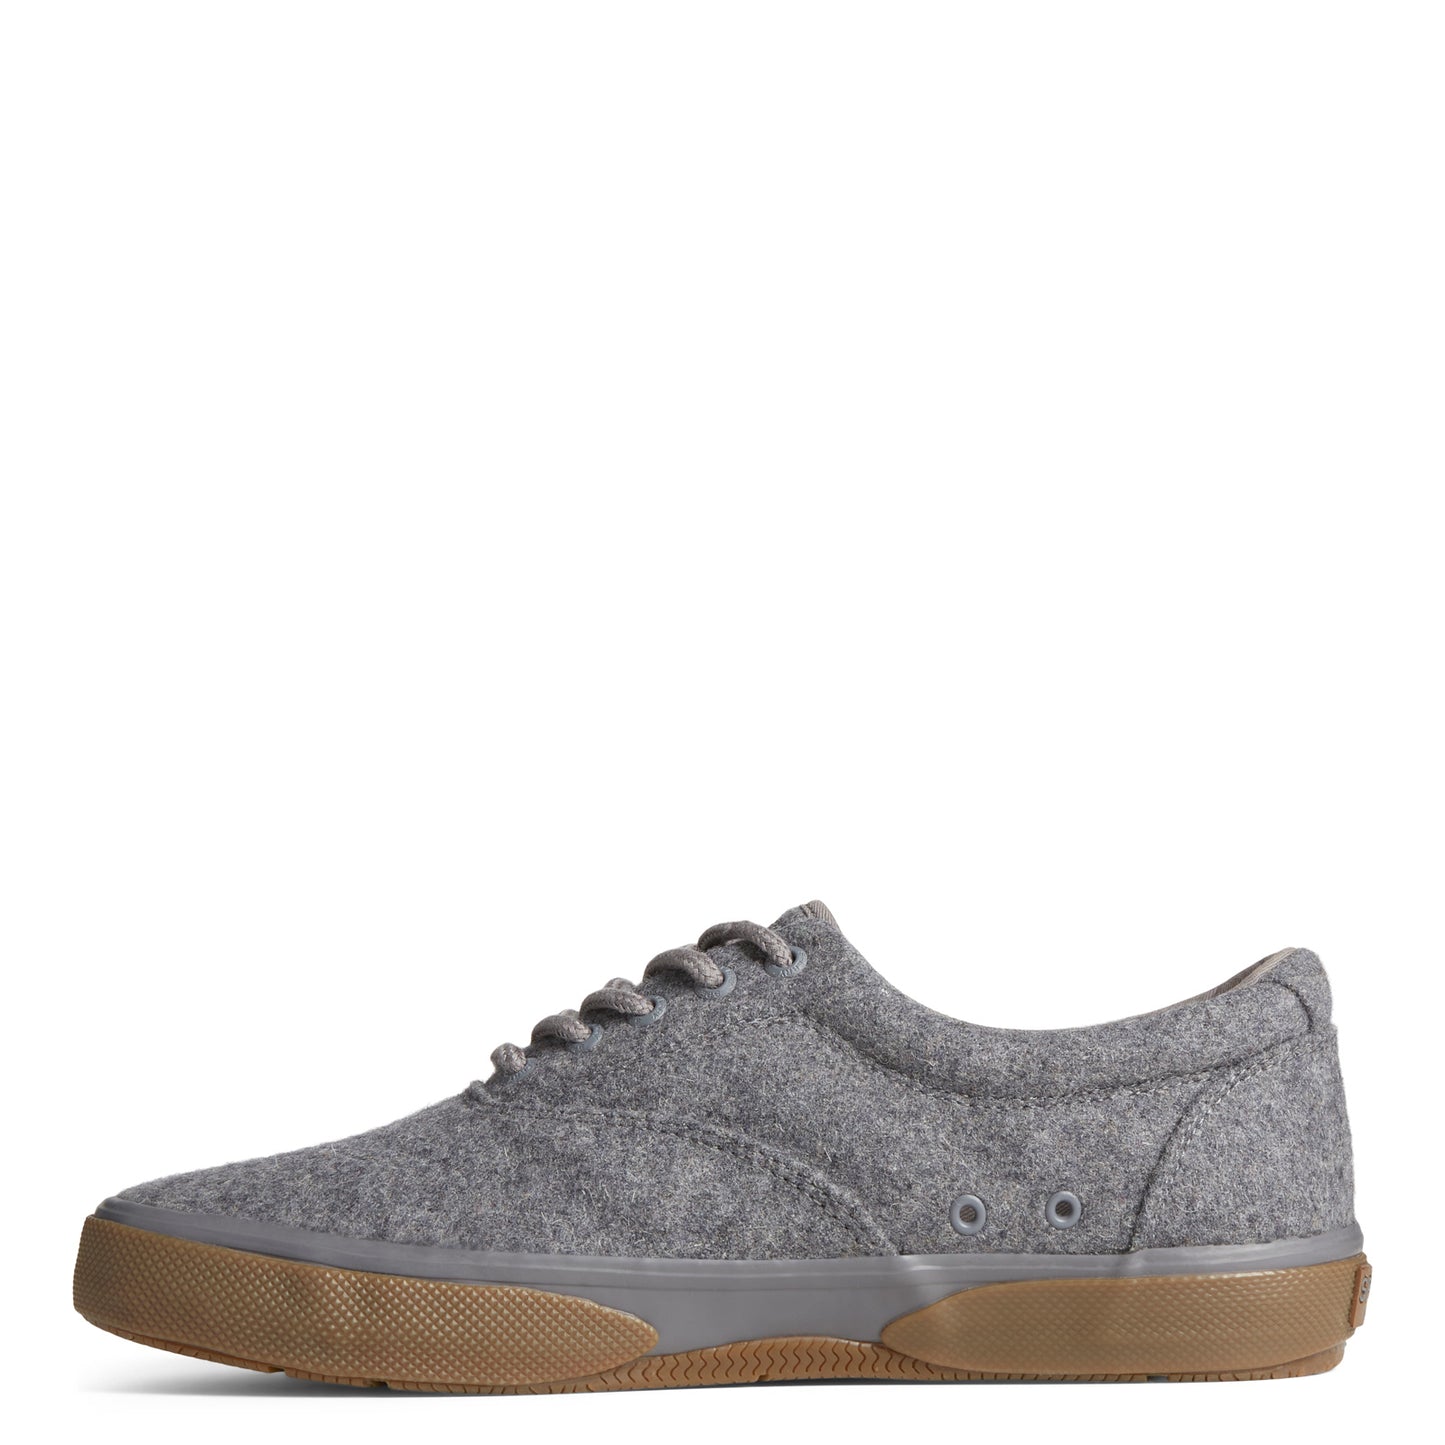 Peltz Shoes  Men's Sperry Halyard CVO Wool Sneaker Grey STS25388